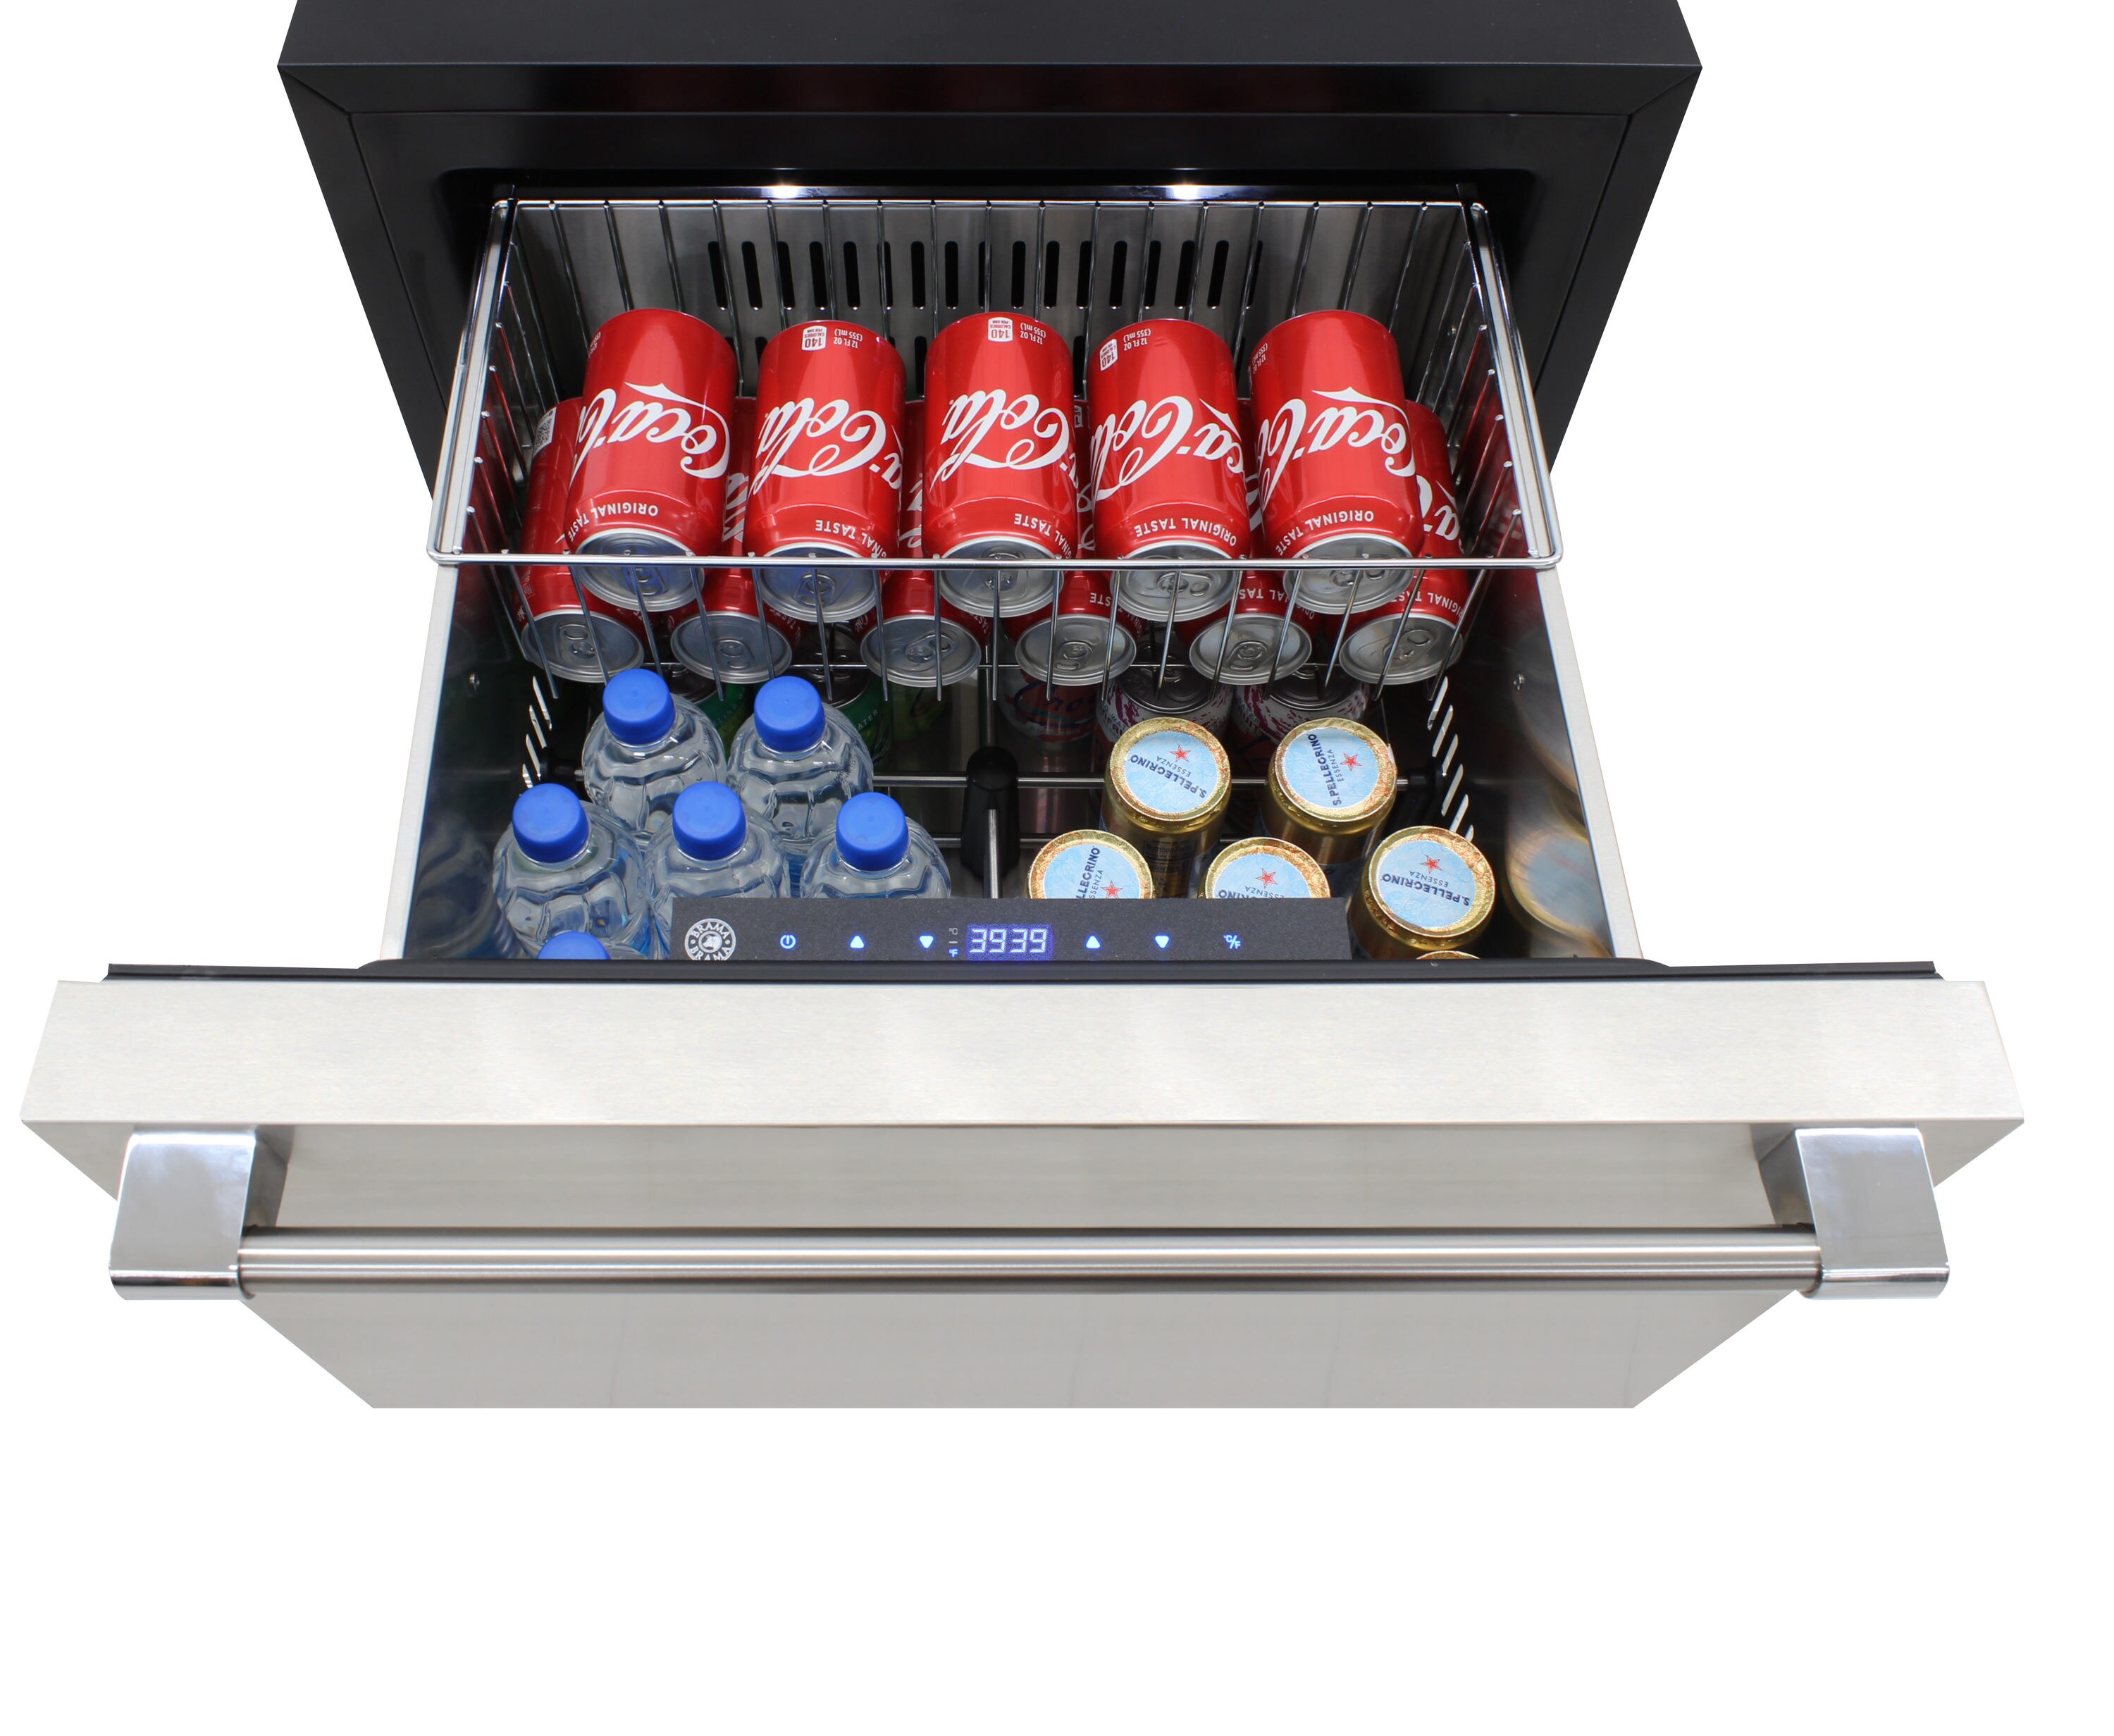 24 Inch Indoor Outdoor Refrigerator Drawer in Stainless Steel